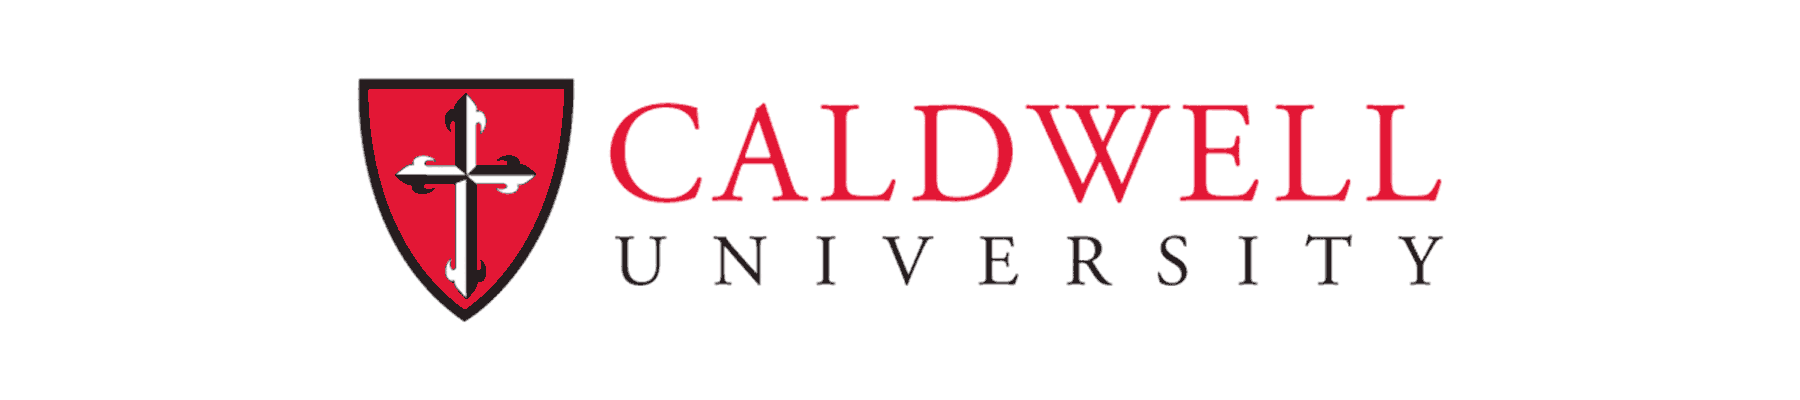 The Caldwell University